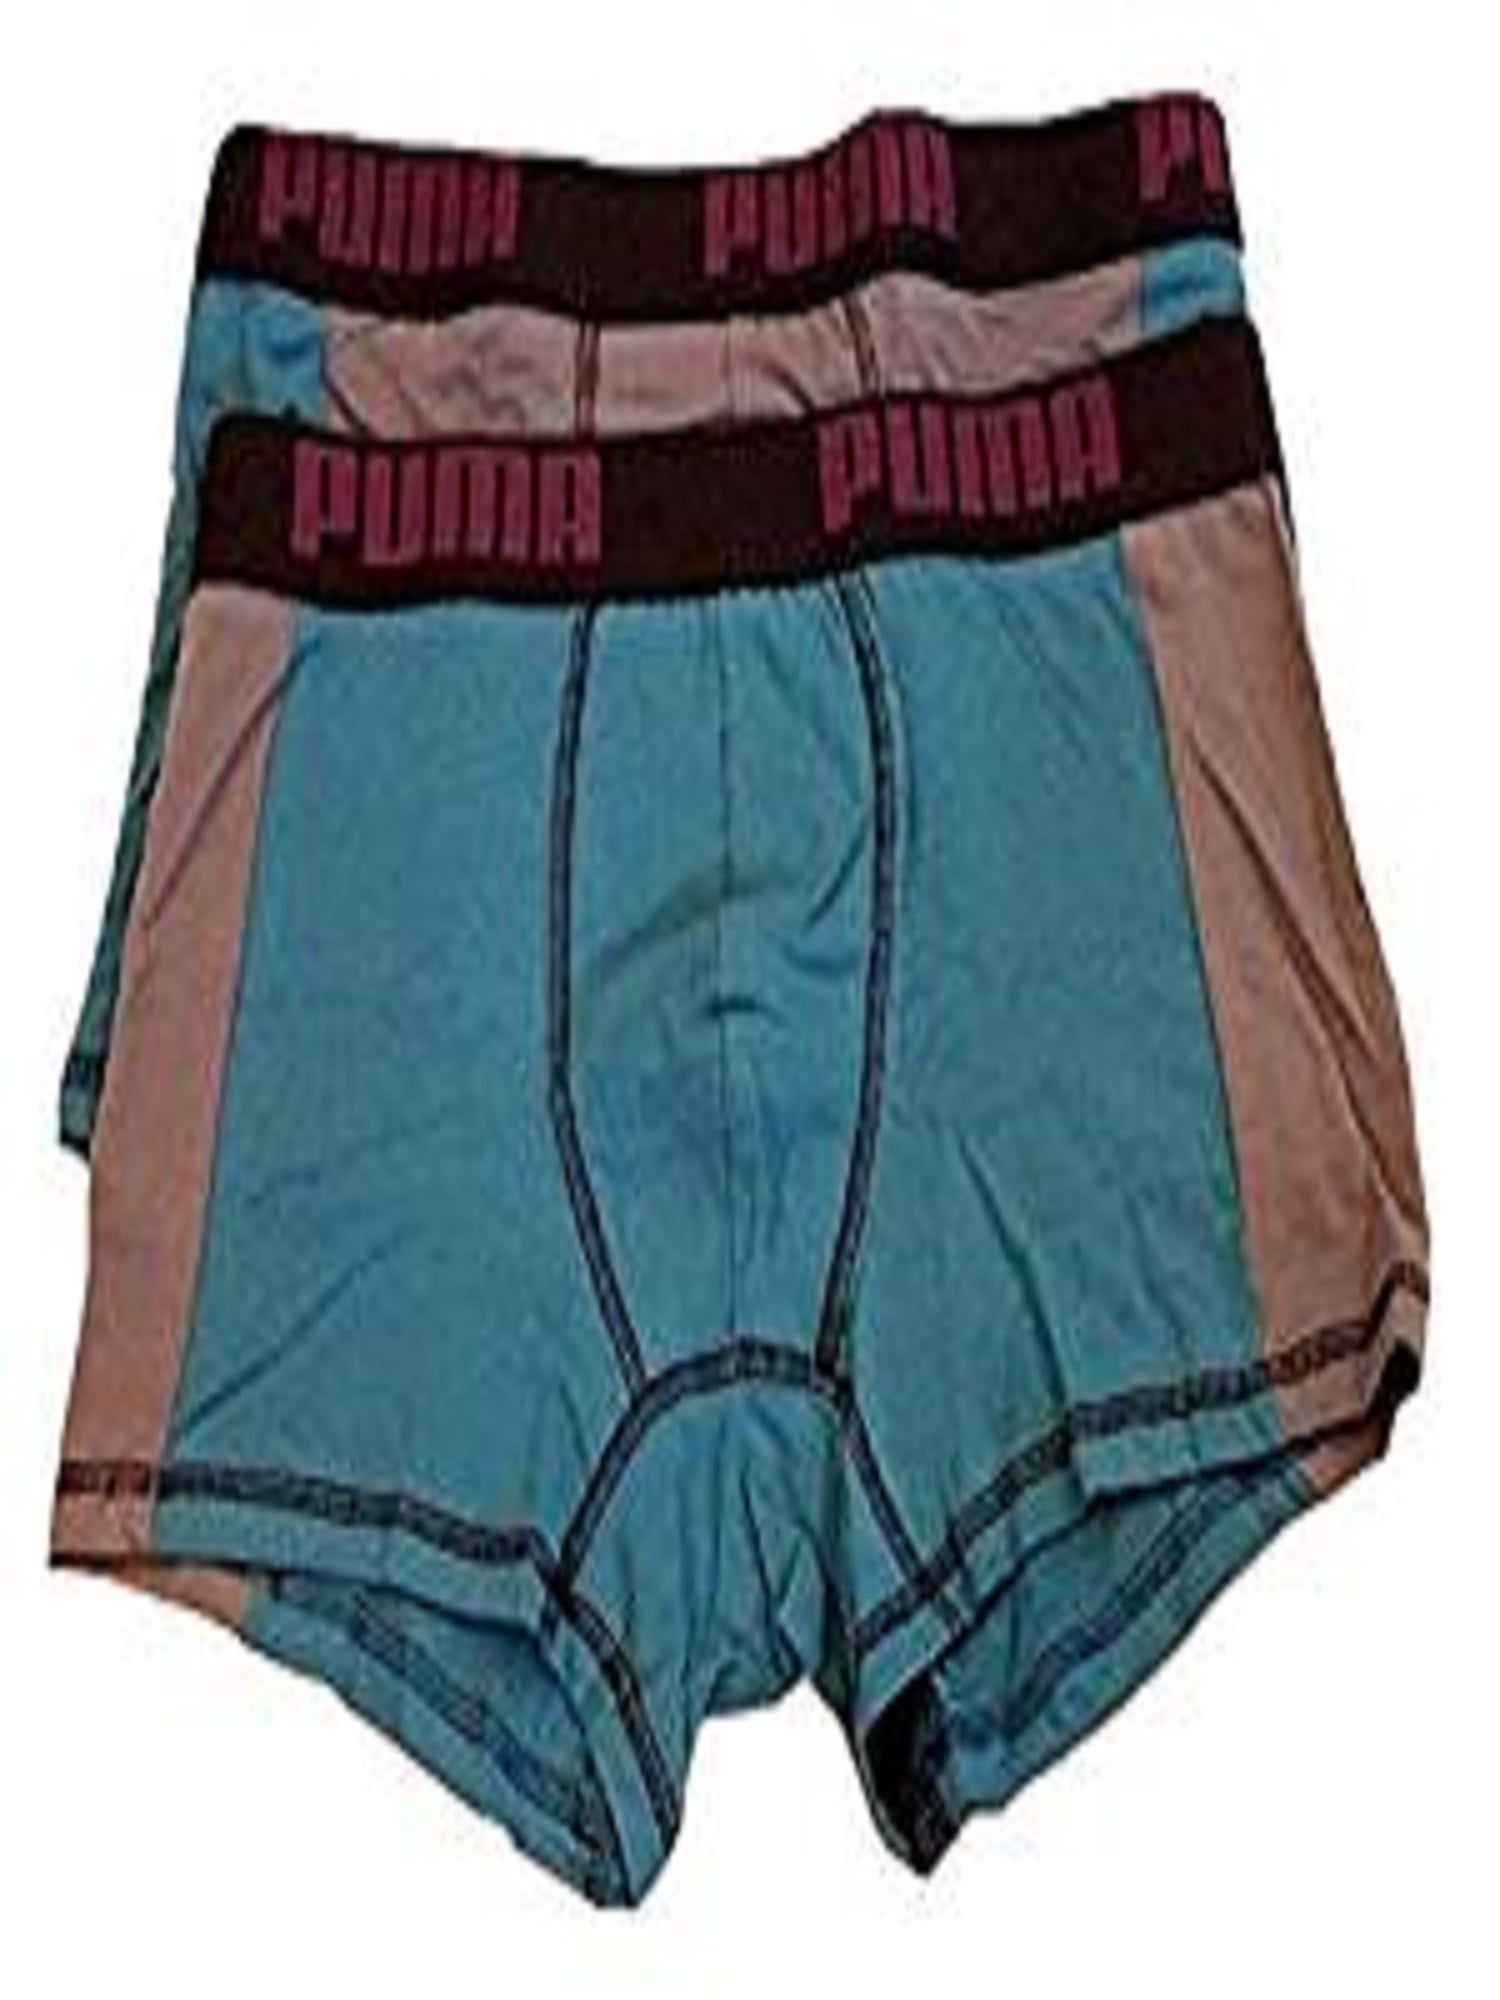 puma trunk underwear